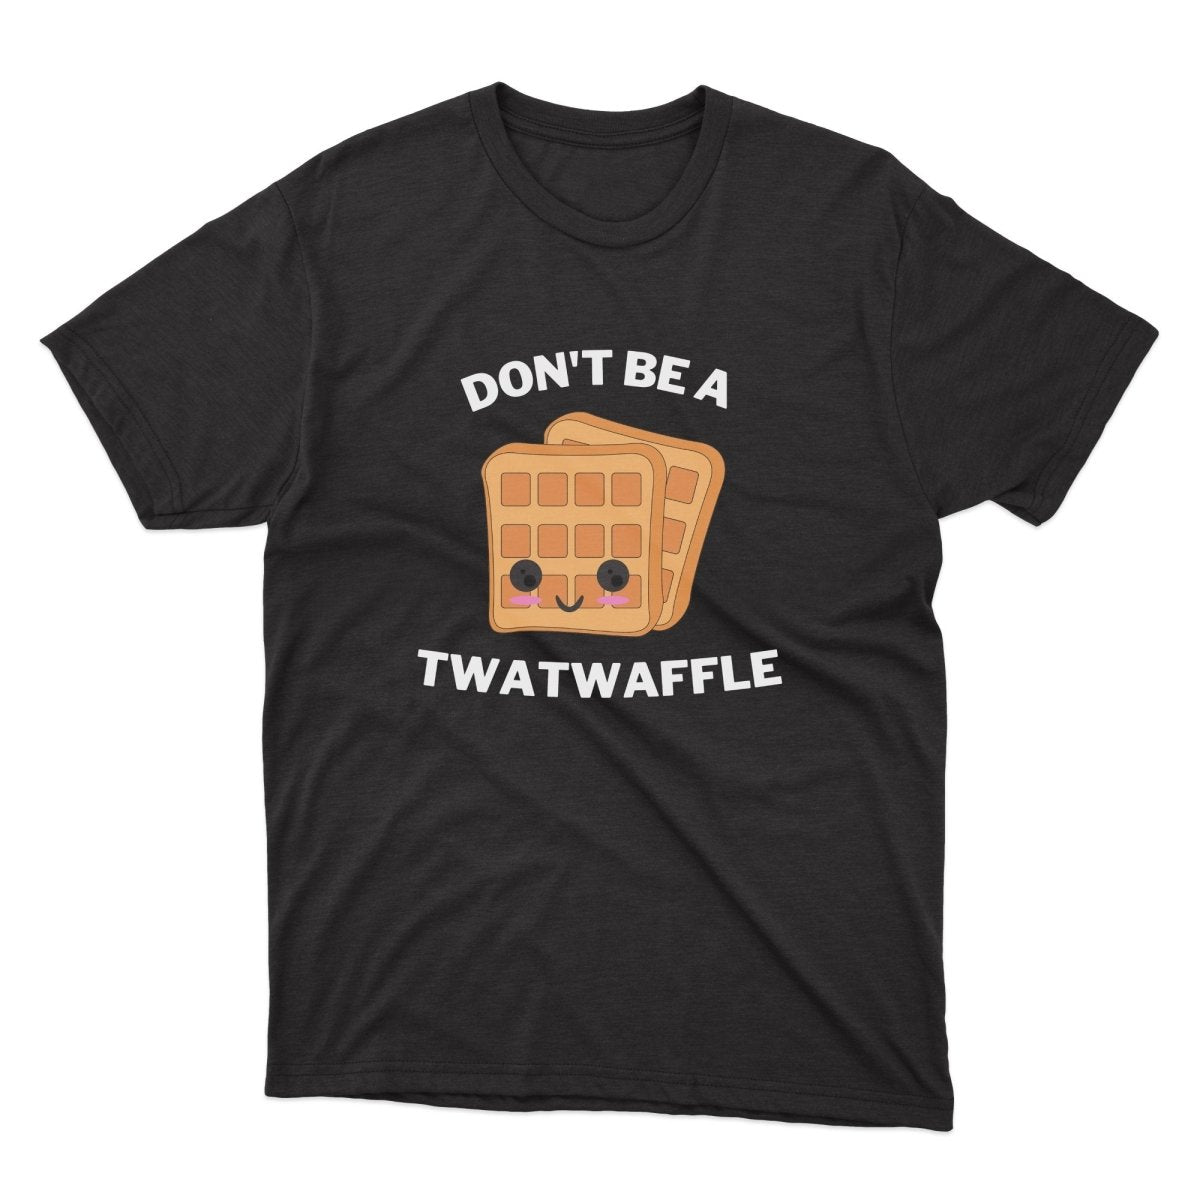 Don't Be A Twat Waffle Shirt - stickerbullDon't Be A Twat Waffle ShirtShirtsPrintifystickerbull22642793340827479439BlackSa black t - shirt that says don't be a twataffle